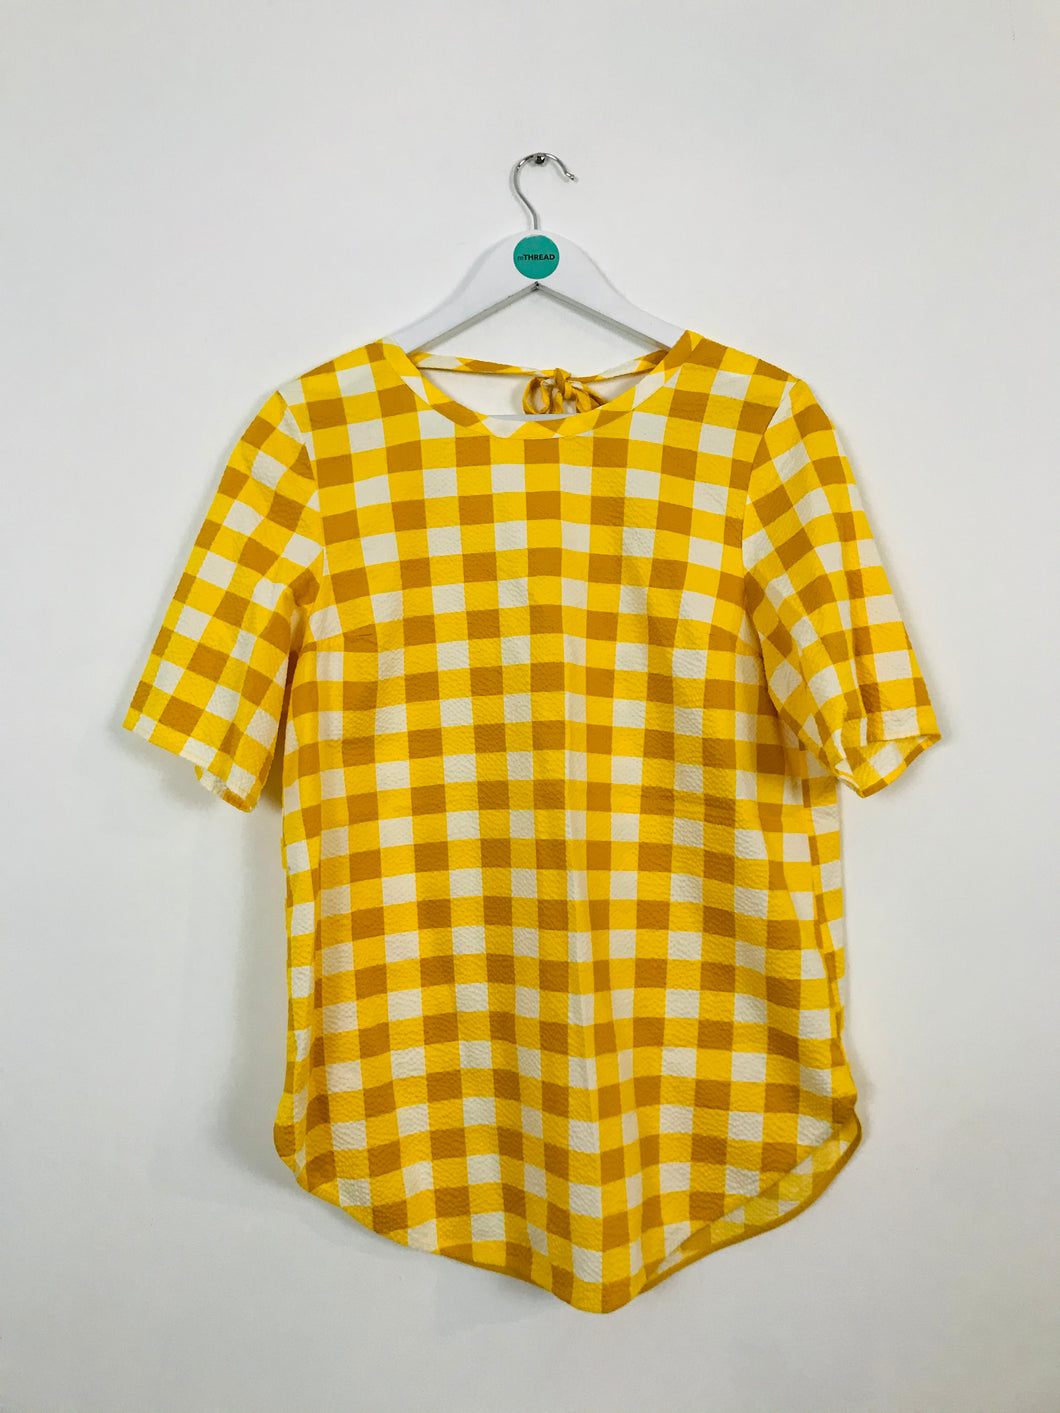 COS Women’s Checkered Blouse | 38 UK12 | Yellow